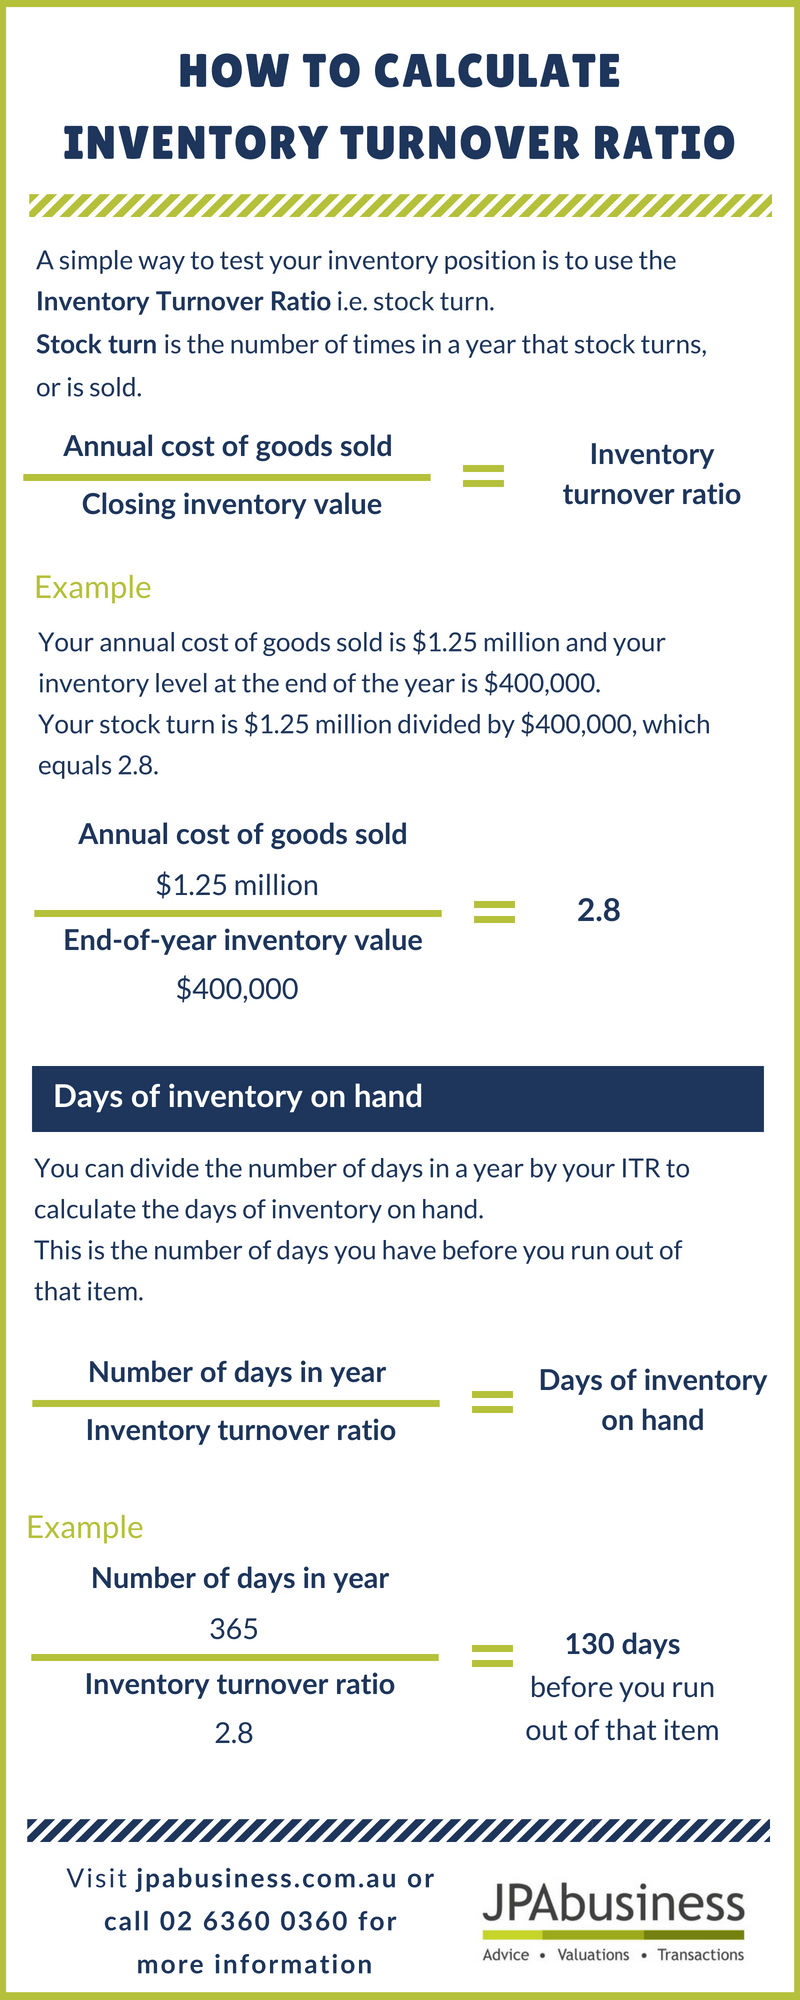 gmc inventory turnover